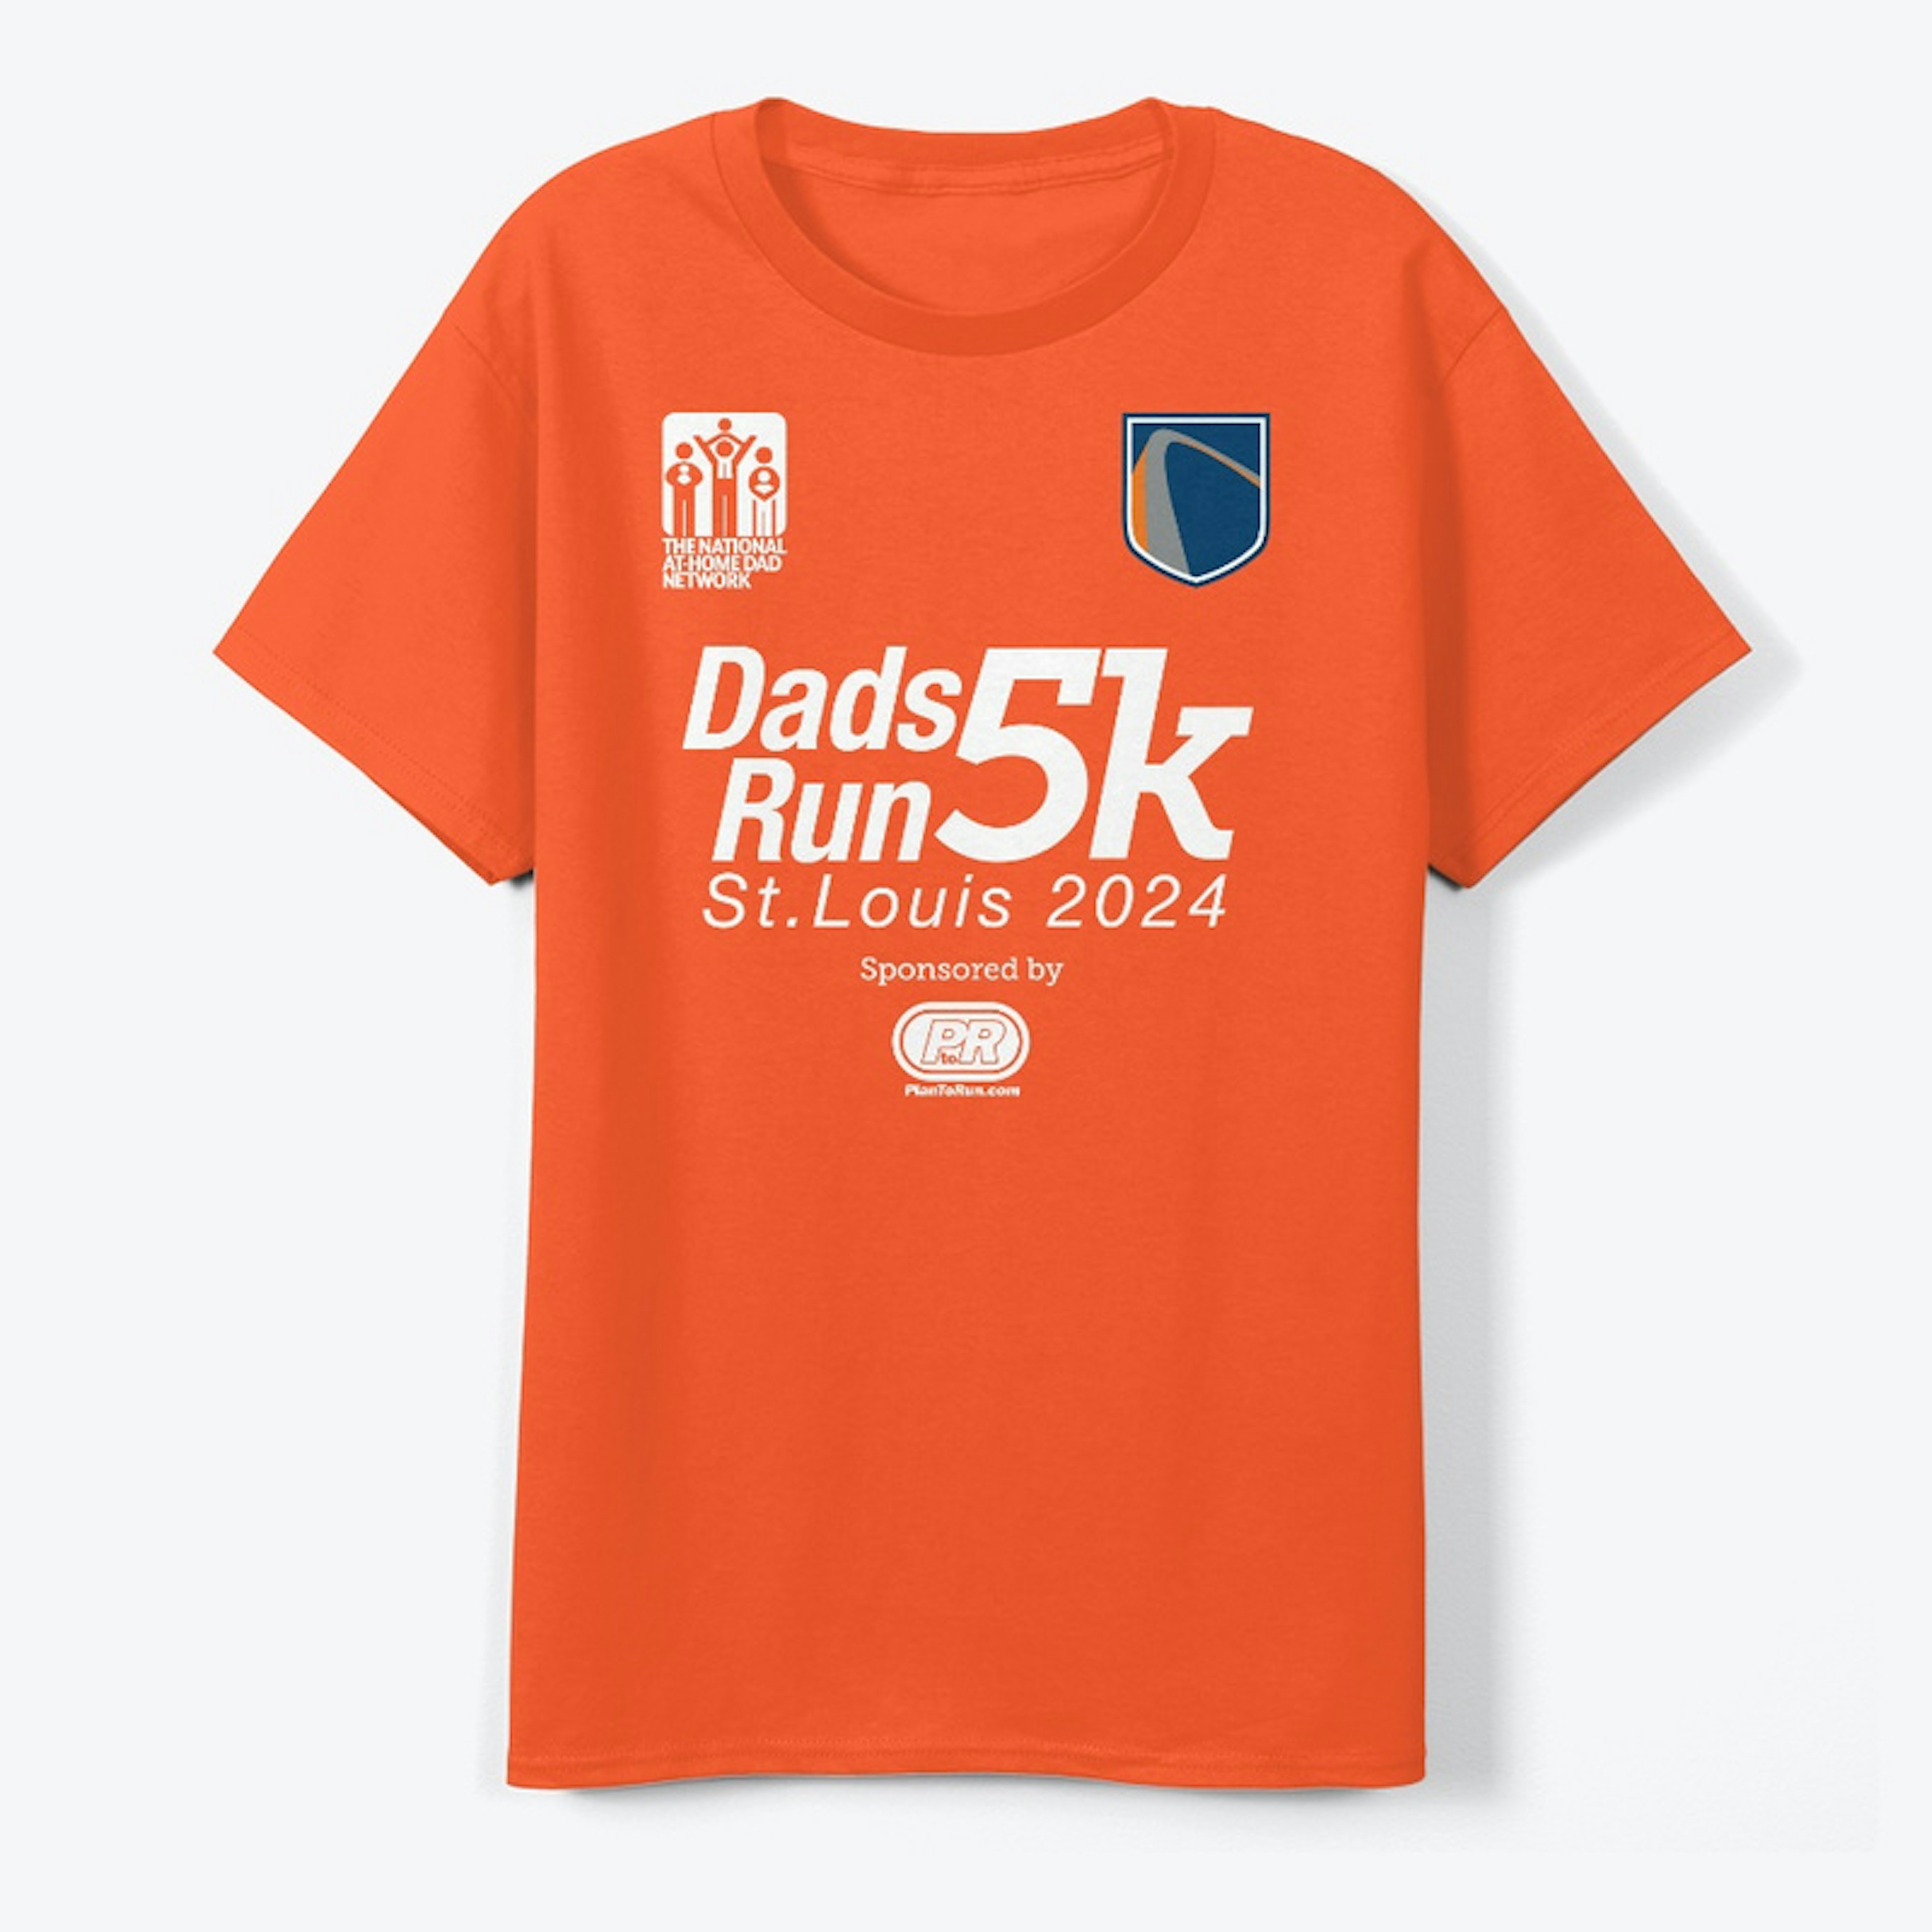 Dads Run 5k STL 2024 Tee